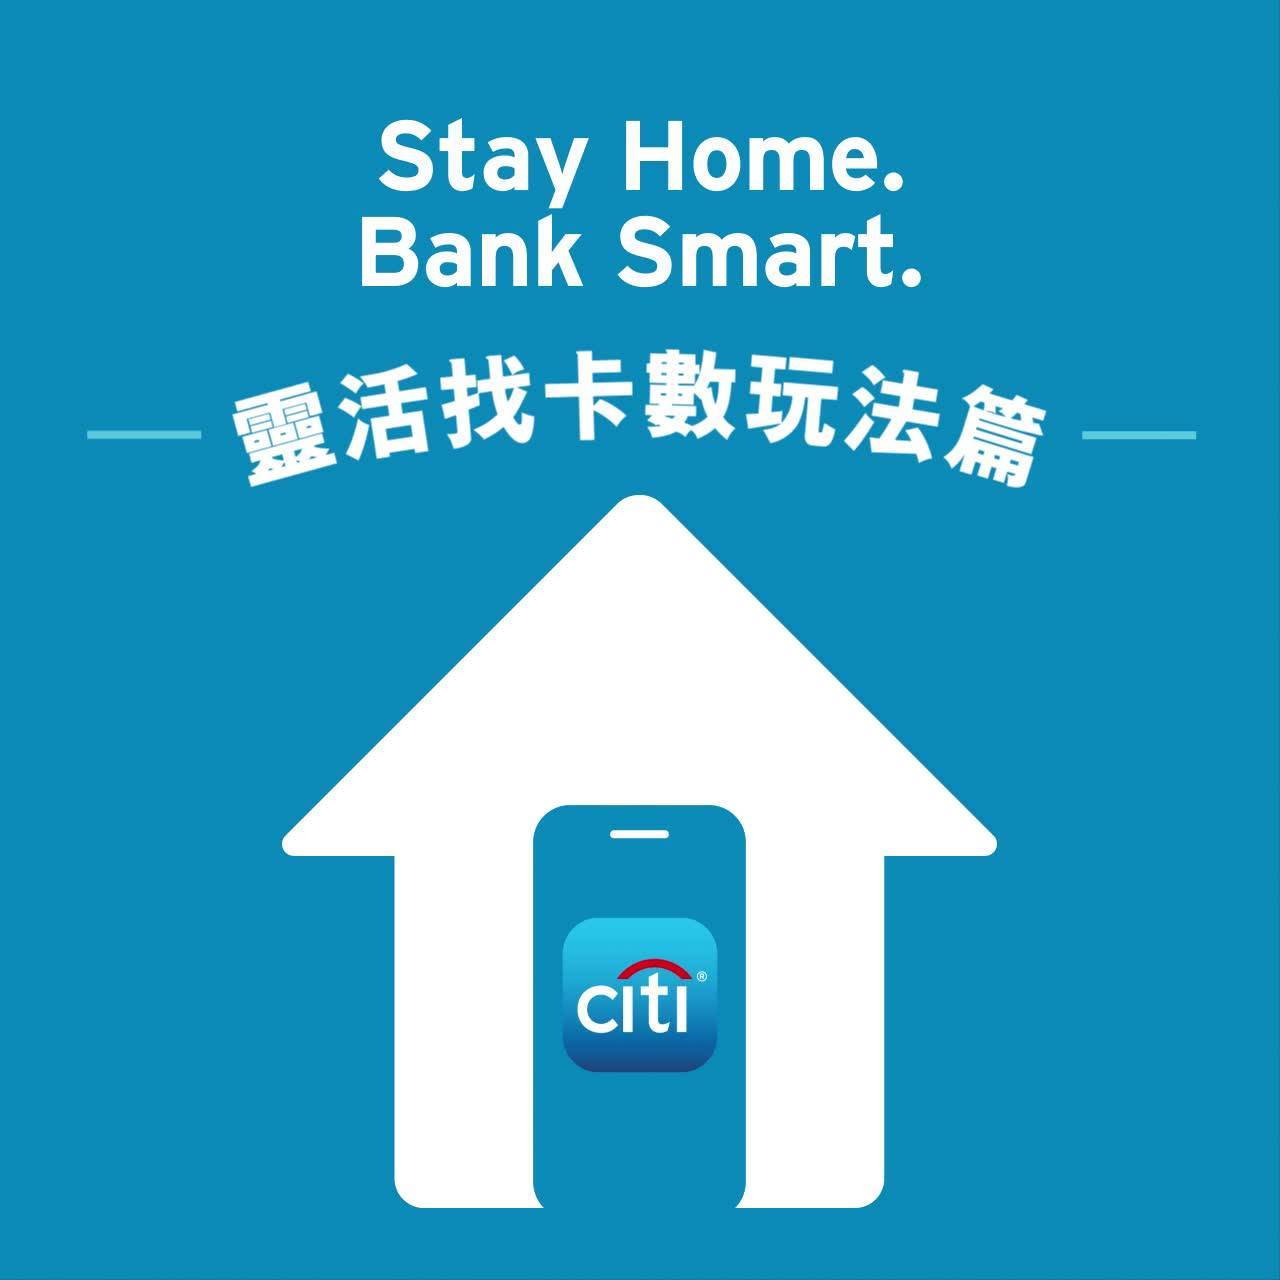 【”Stay Home. Bank Smart.” – 靈活找卡數玩法篇】